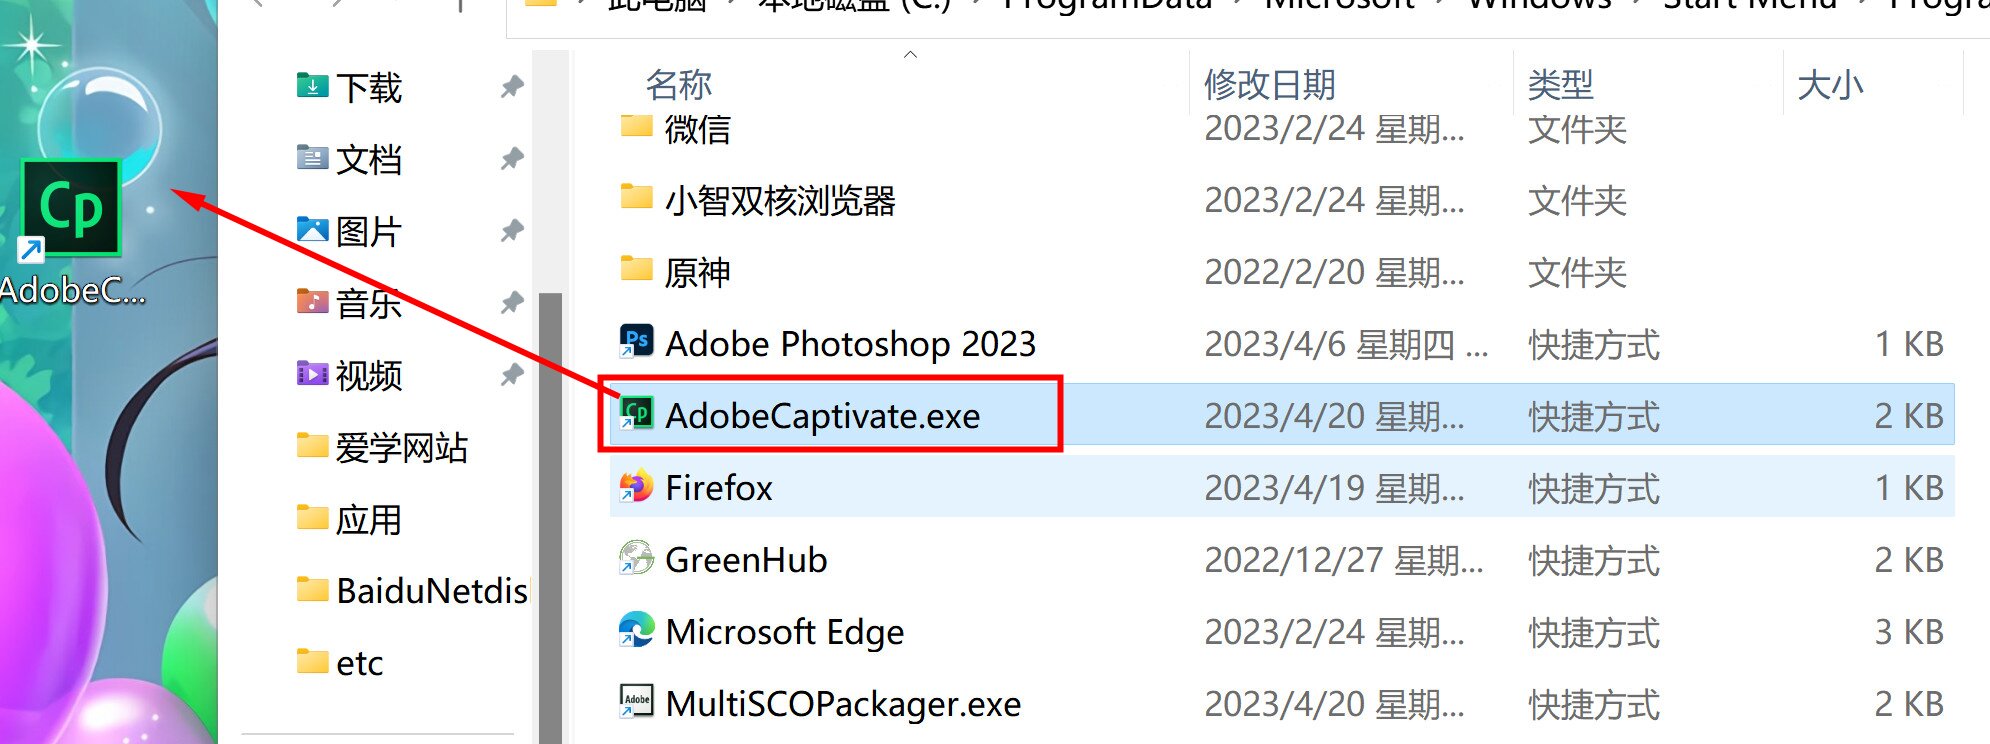 Adobe Captivate 2019(多媒体课程创建) v11.5.5.553 中文永久使用下载